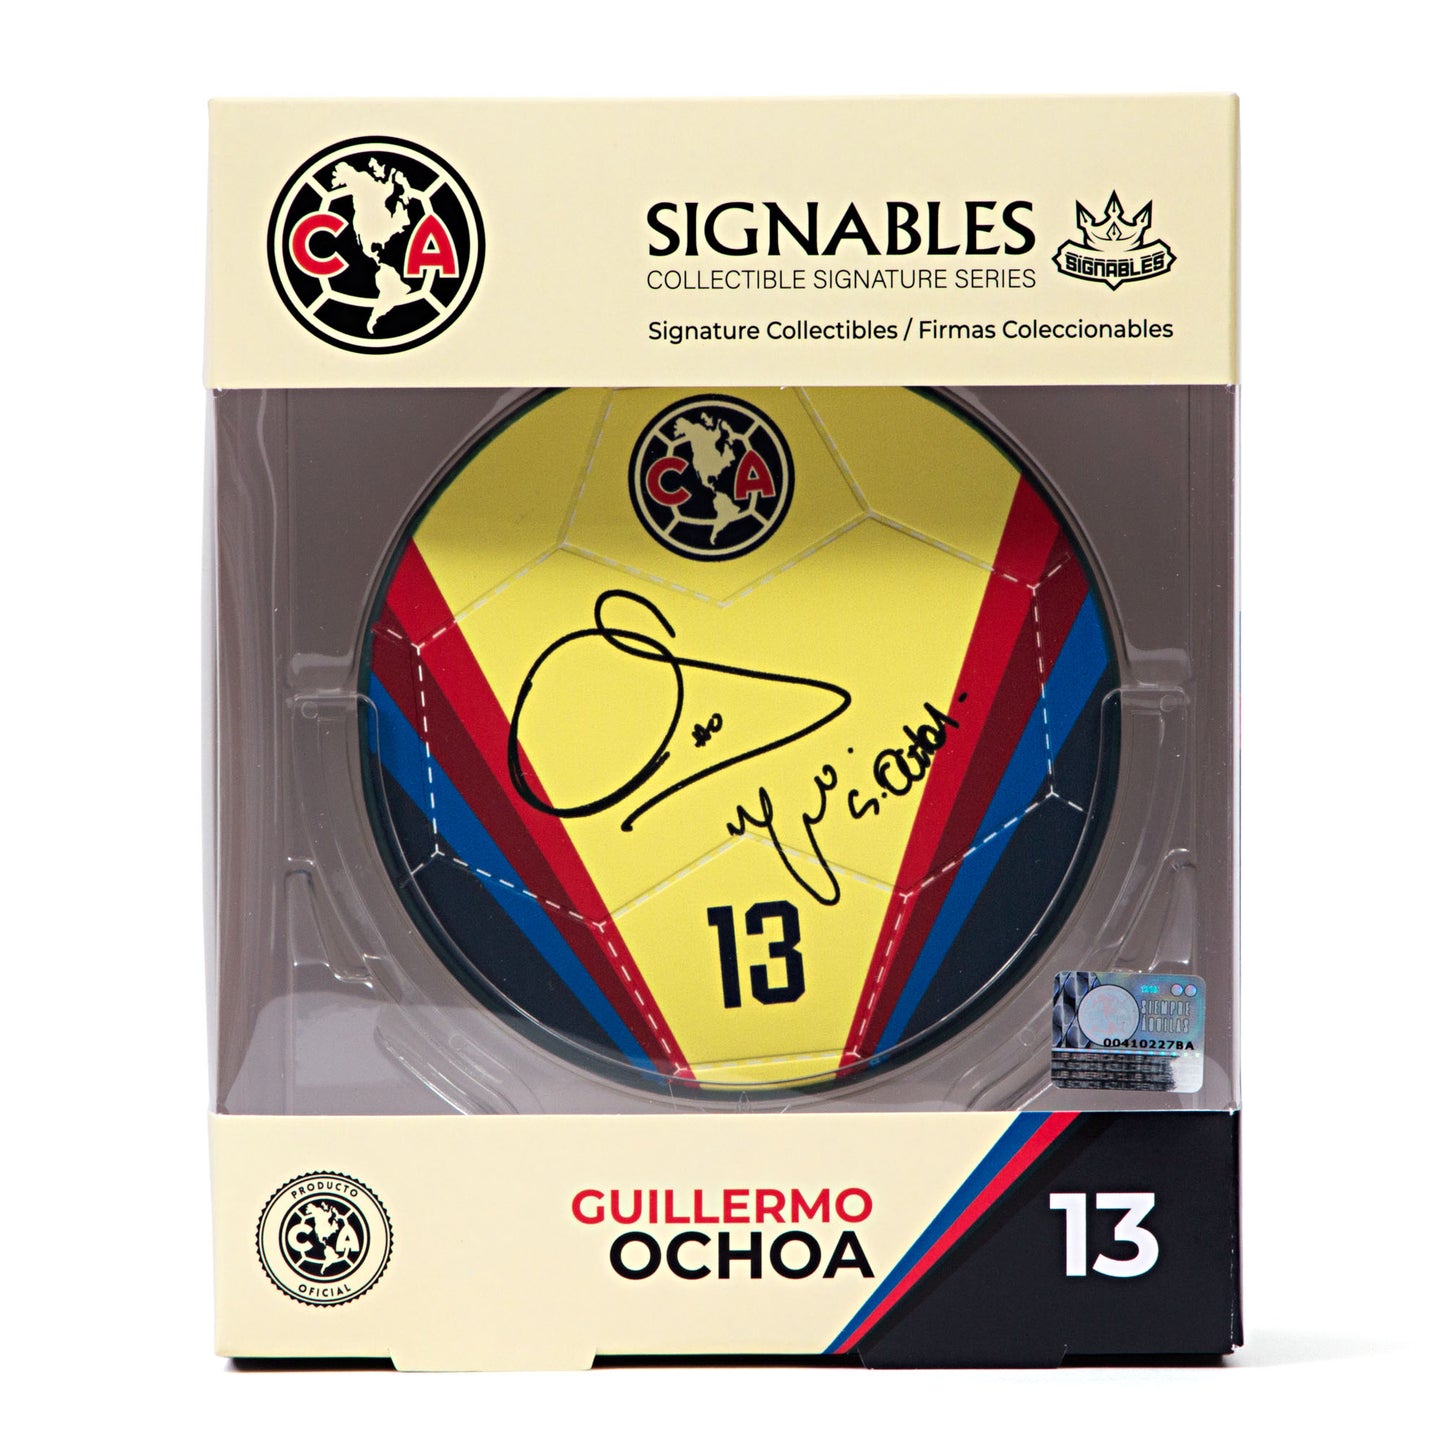 Guillermo Ochoa - Club America 2022-23 Signables Collectible